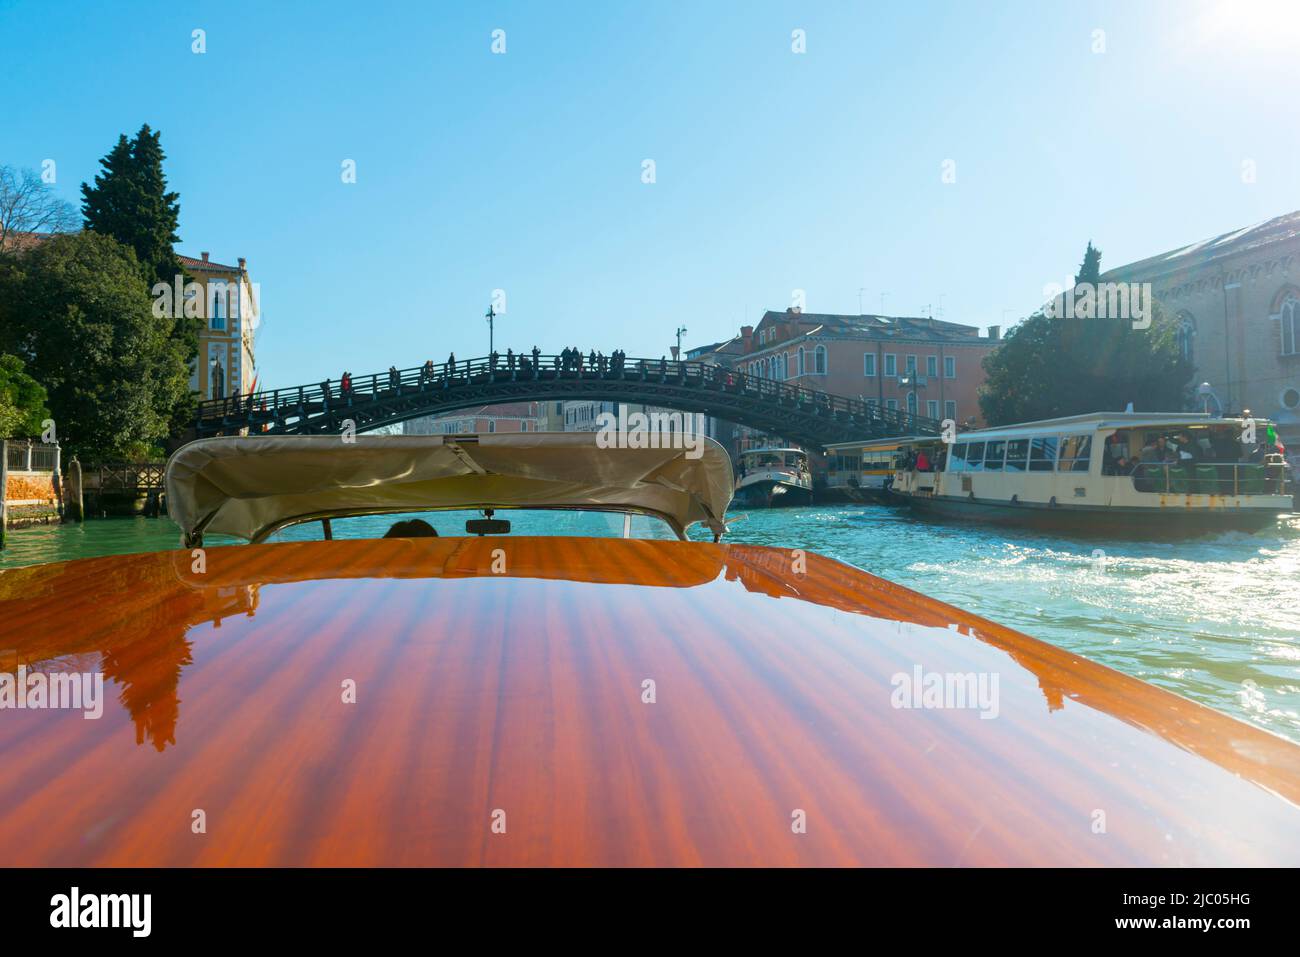 Elegantes Holz Motorboot Reisen Sie auf dem Wasserkanal mit Building in a Sunny Day in Venedig, Venetien in Italien. Stockfoto